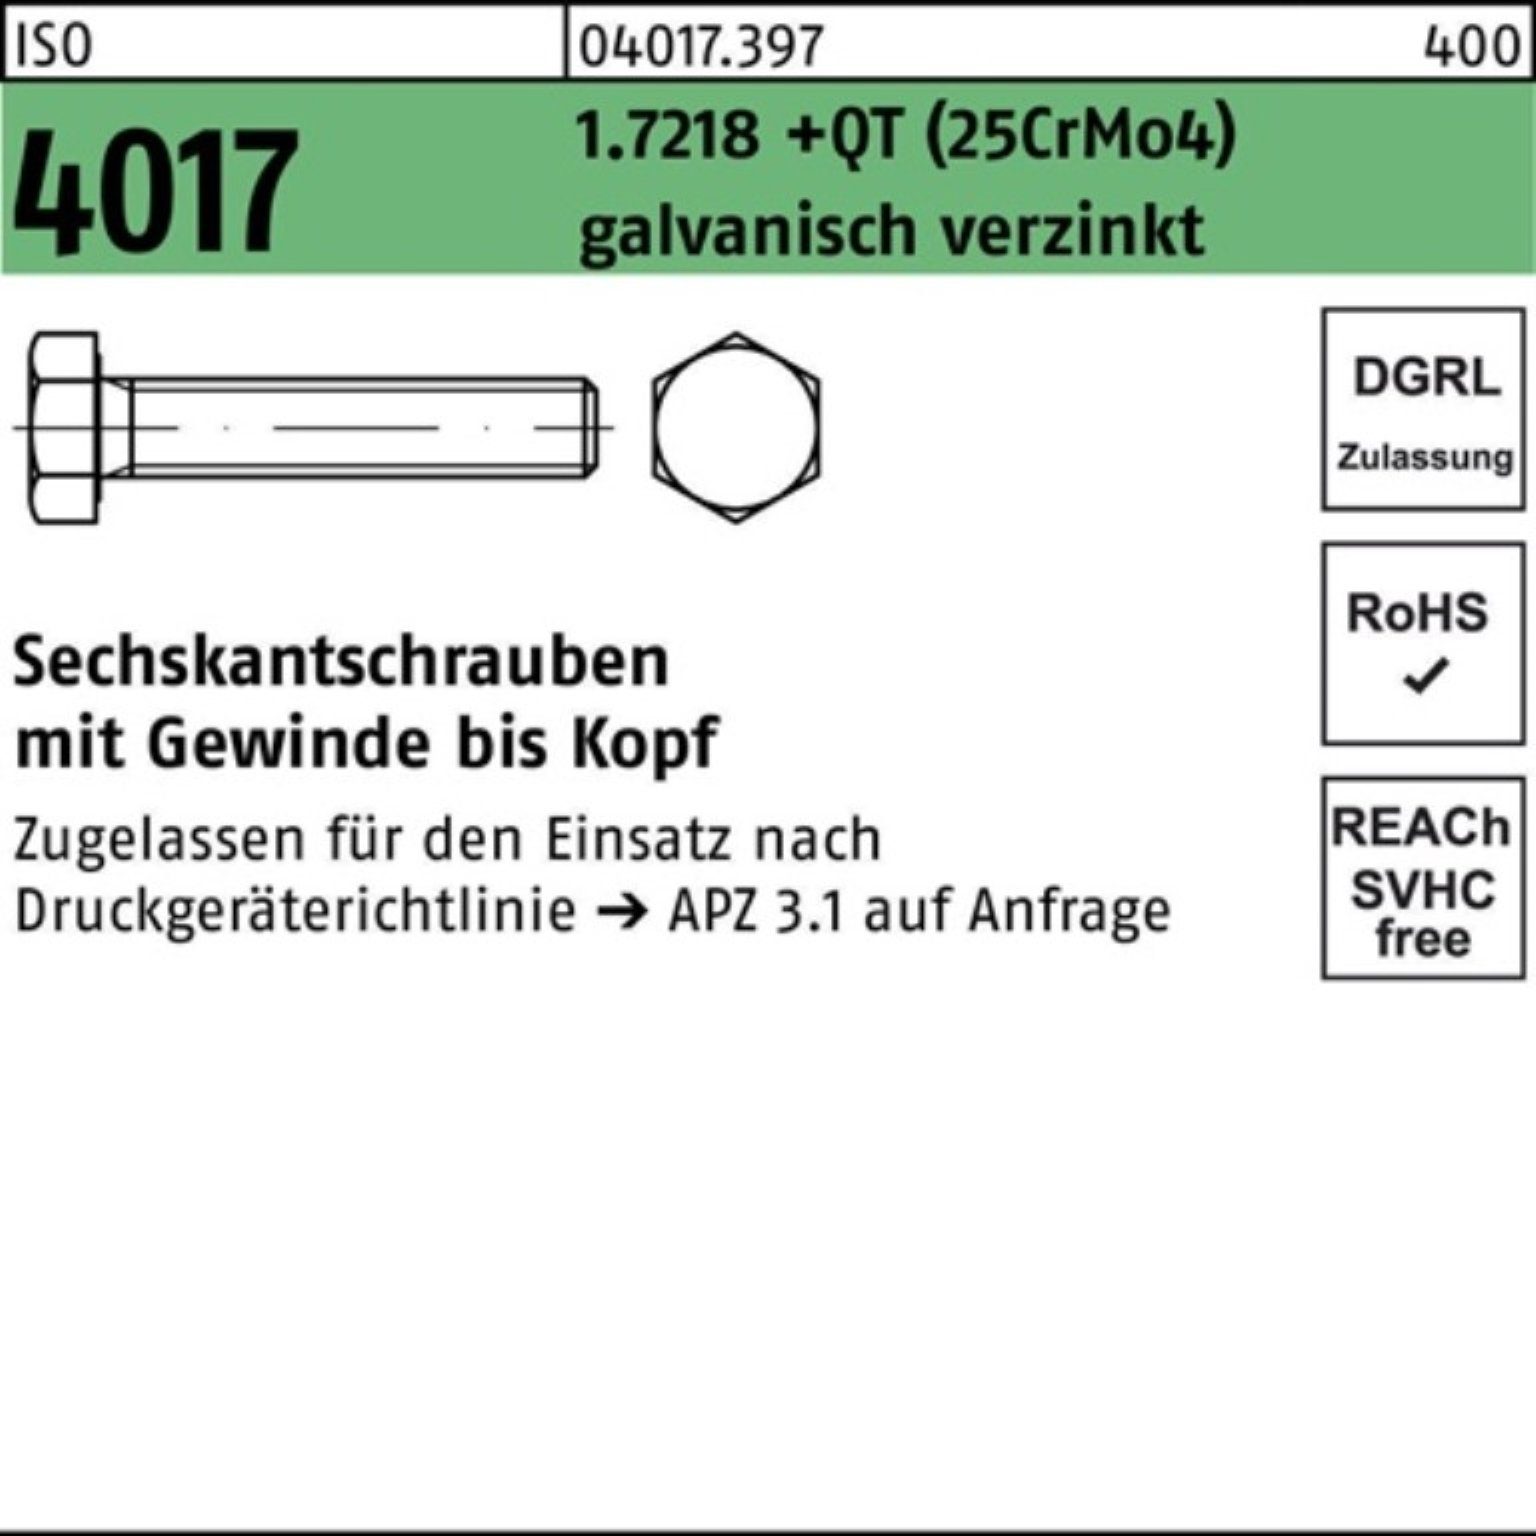 Bufab Sechskantschraube 100er Pack Sechskantschraube +QT 4017 (25CrMo4) VG 1.7218 M16x30 ISO g